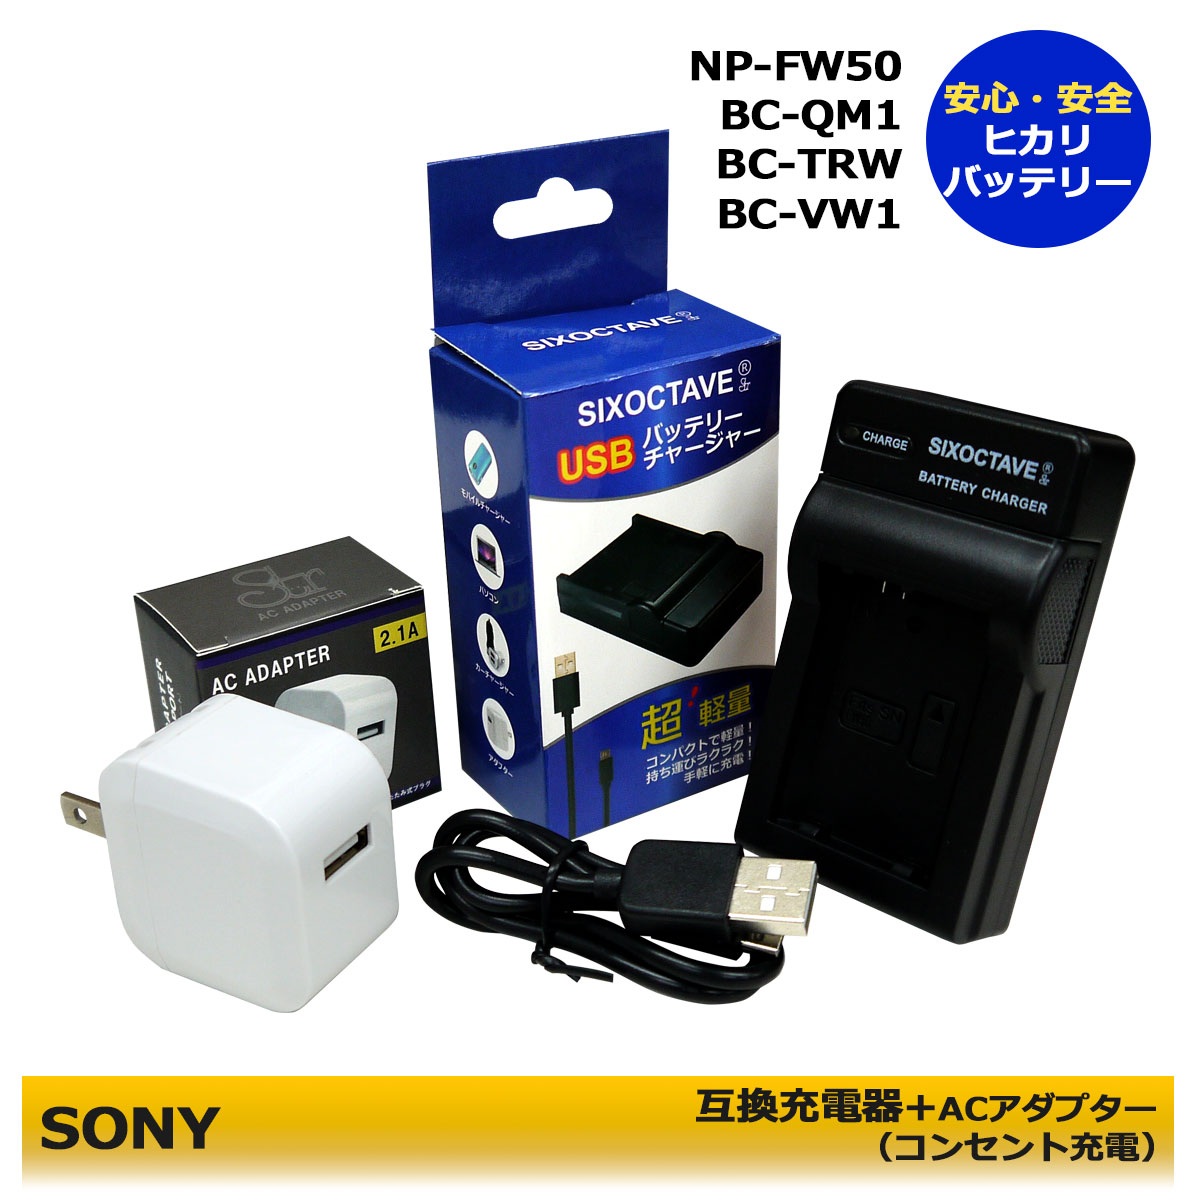 SONY ソニー NP-FW50 Micro USB付き 急速充電器 互換品